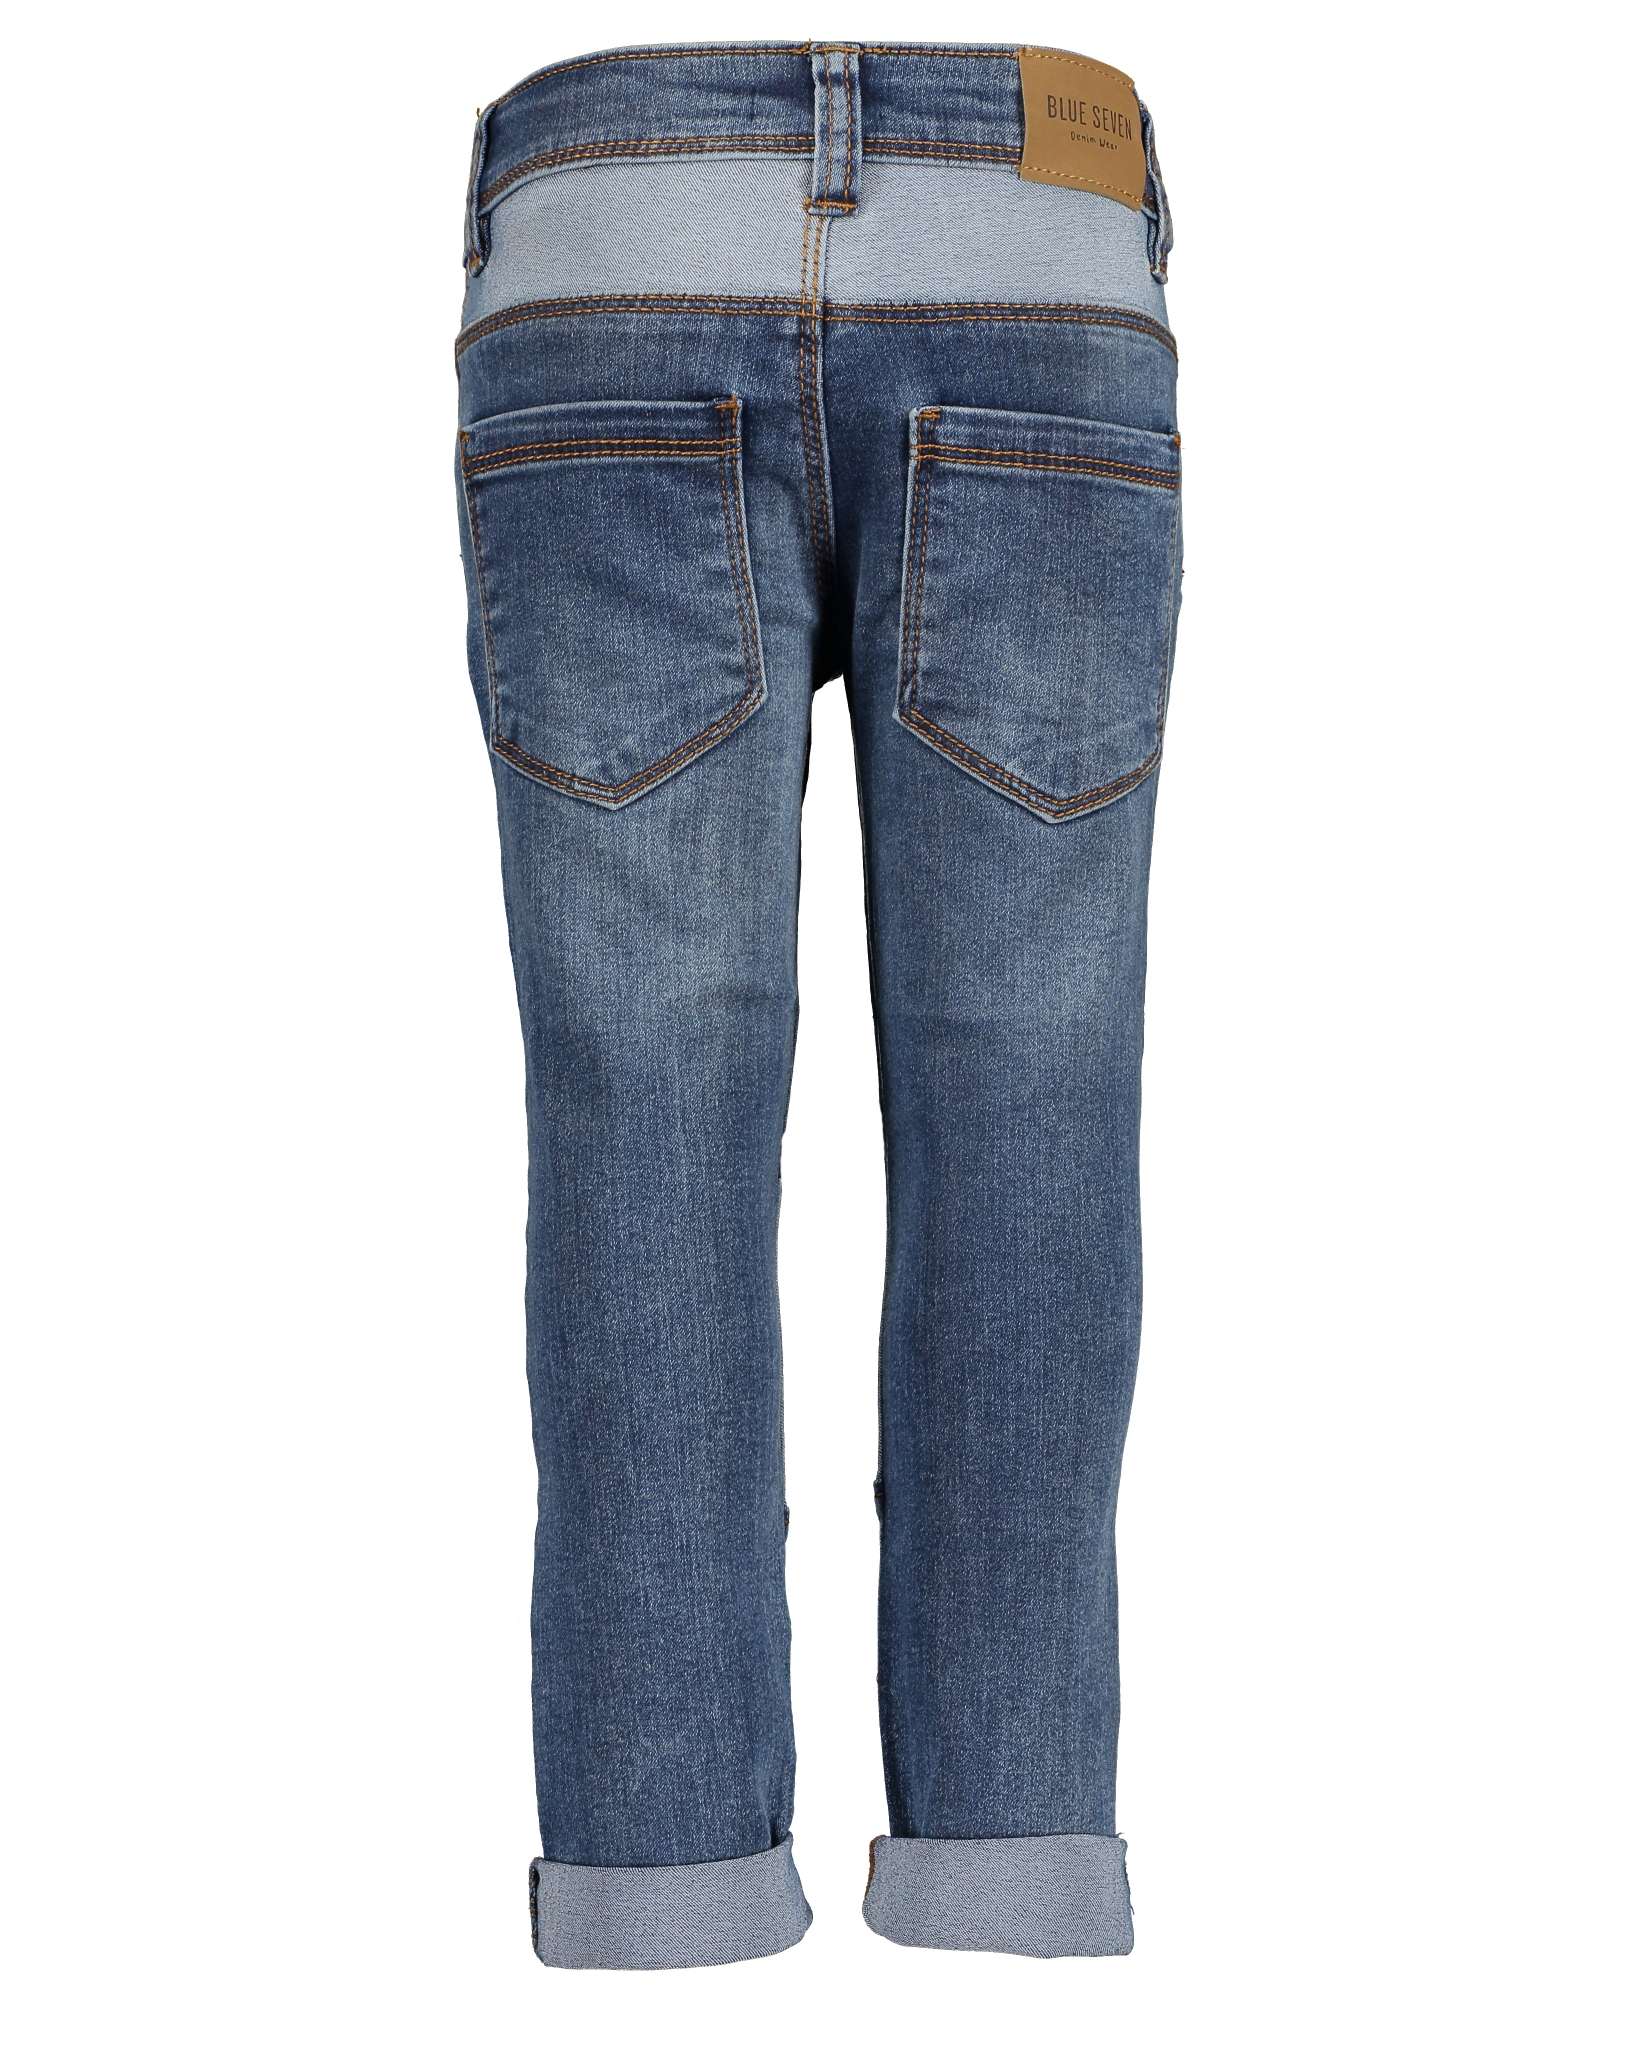 Boys Patchwork Slim Fit Jeans - Nana B Baby & Childrenswear Boutique